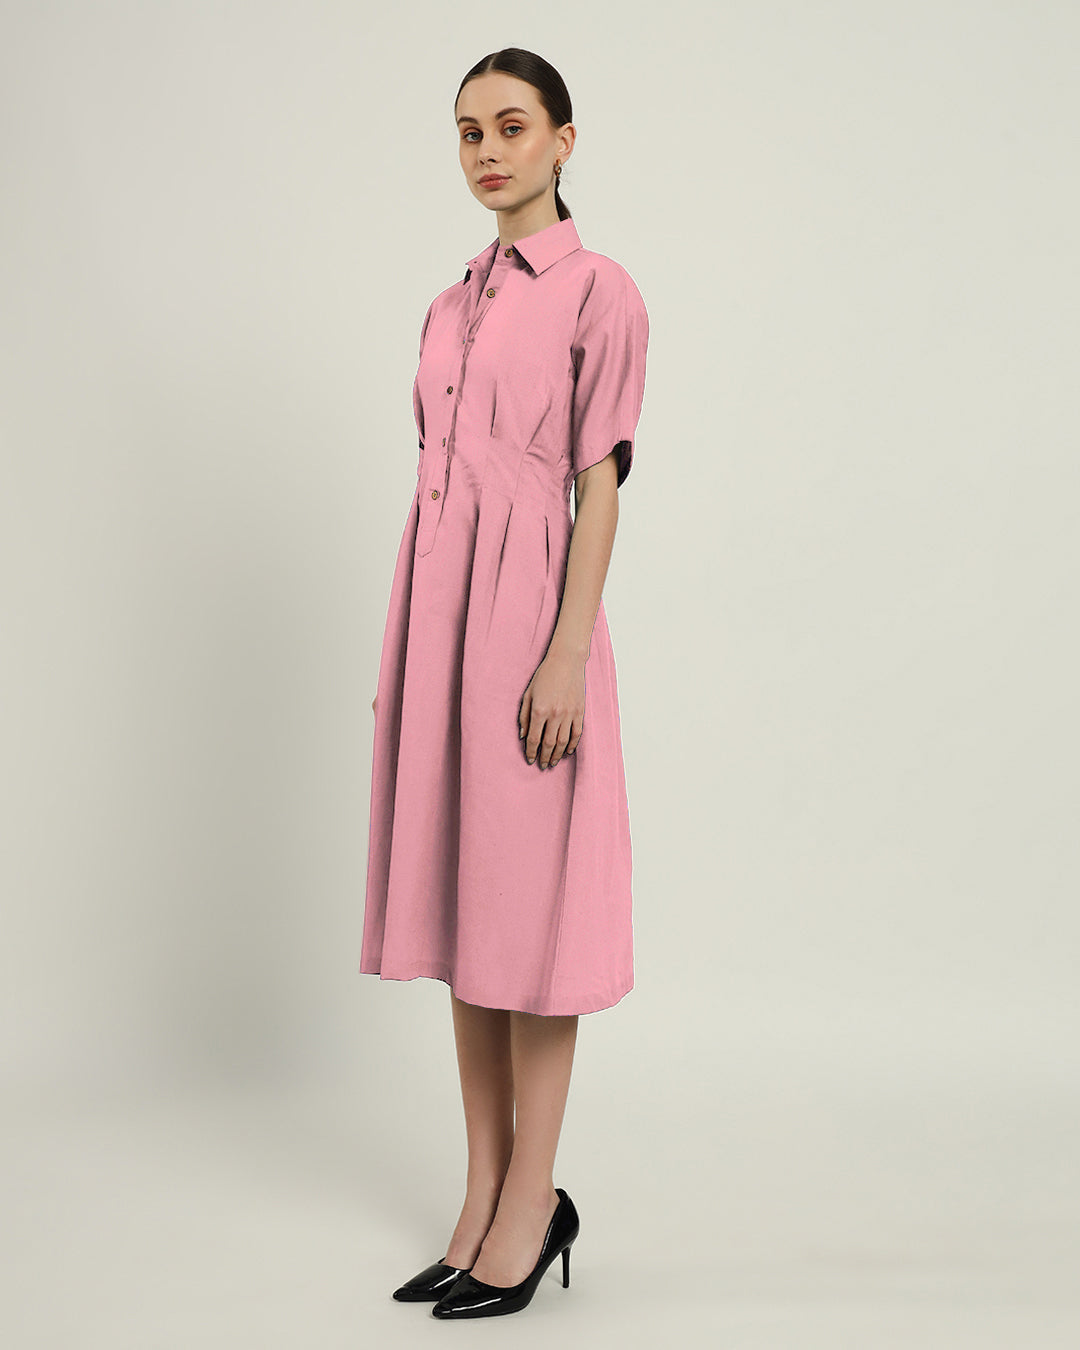 The Salford Fondant Pink Cotton Dress